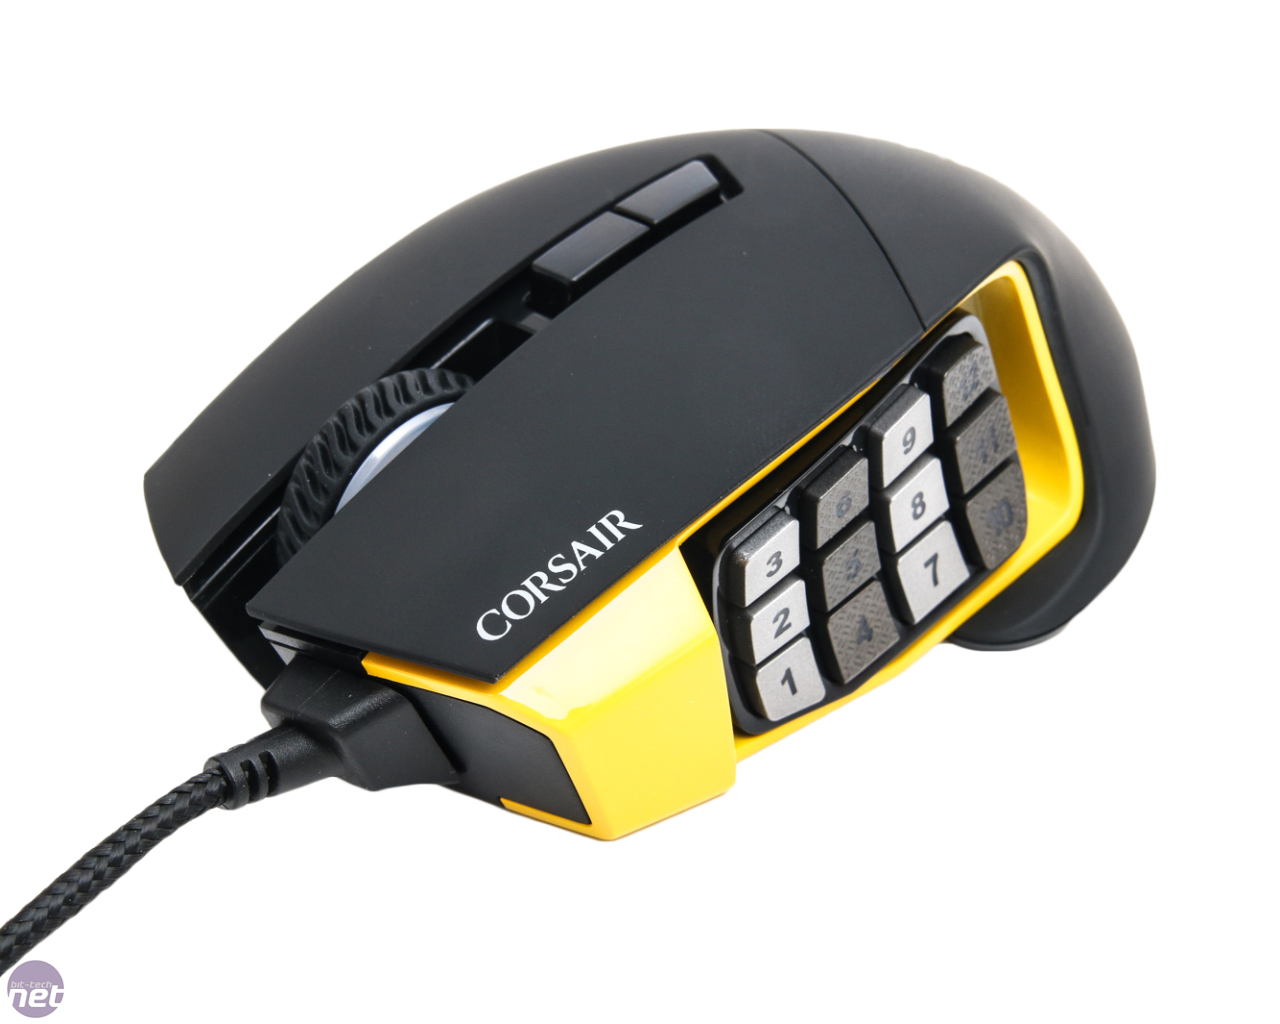 Corsair Mouse Software